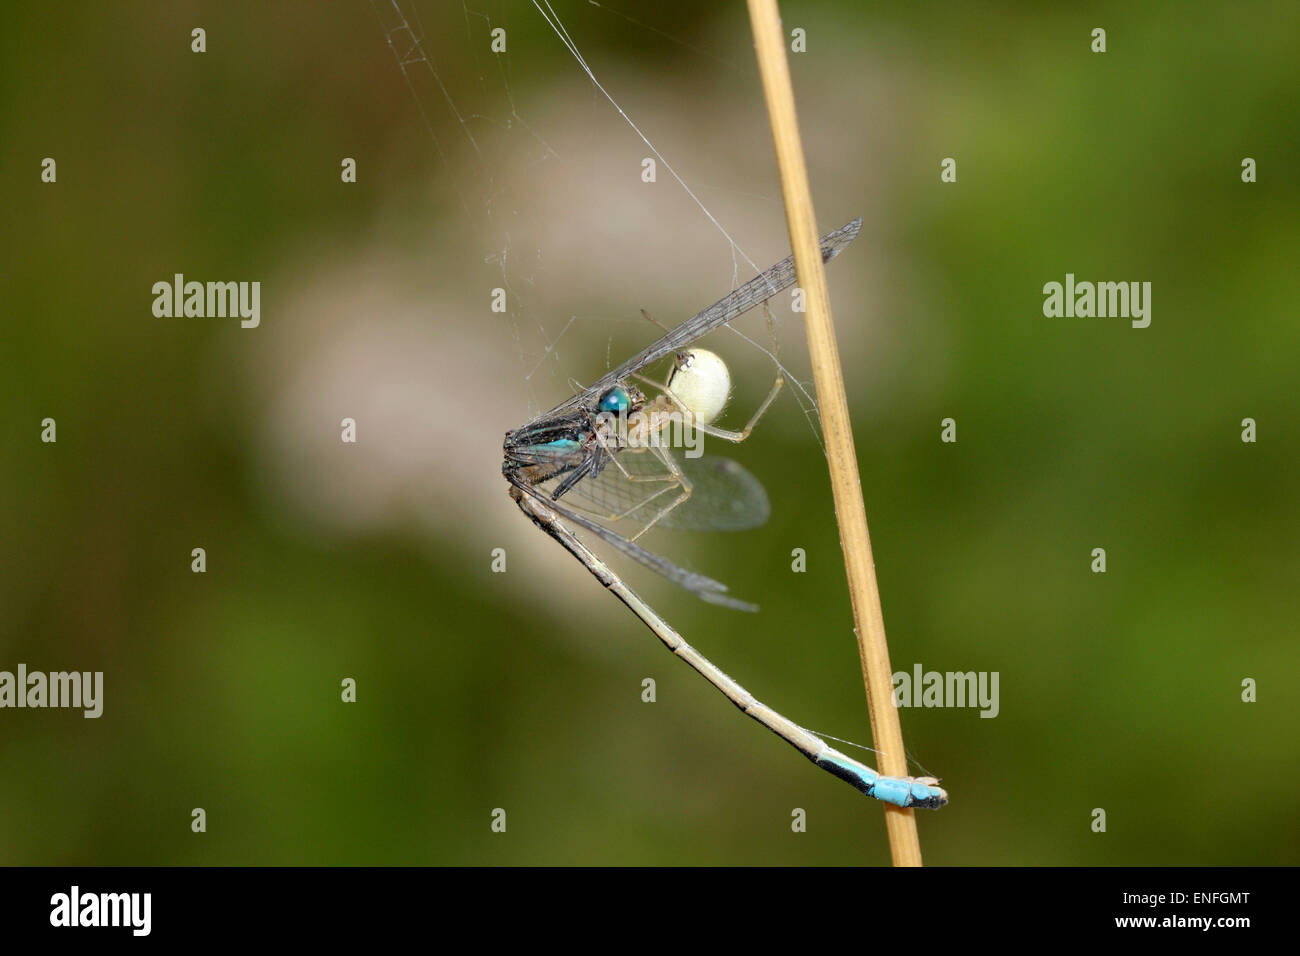 Comb-footed Spider - Enoplognatha ovata - demoiselle avec ses proies. Banque D'Images